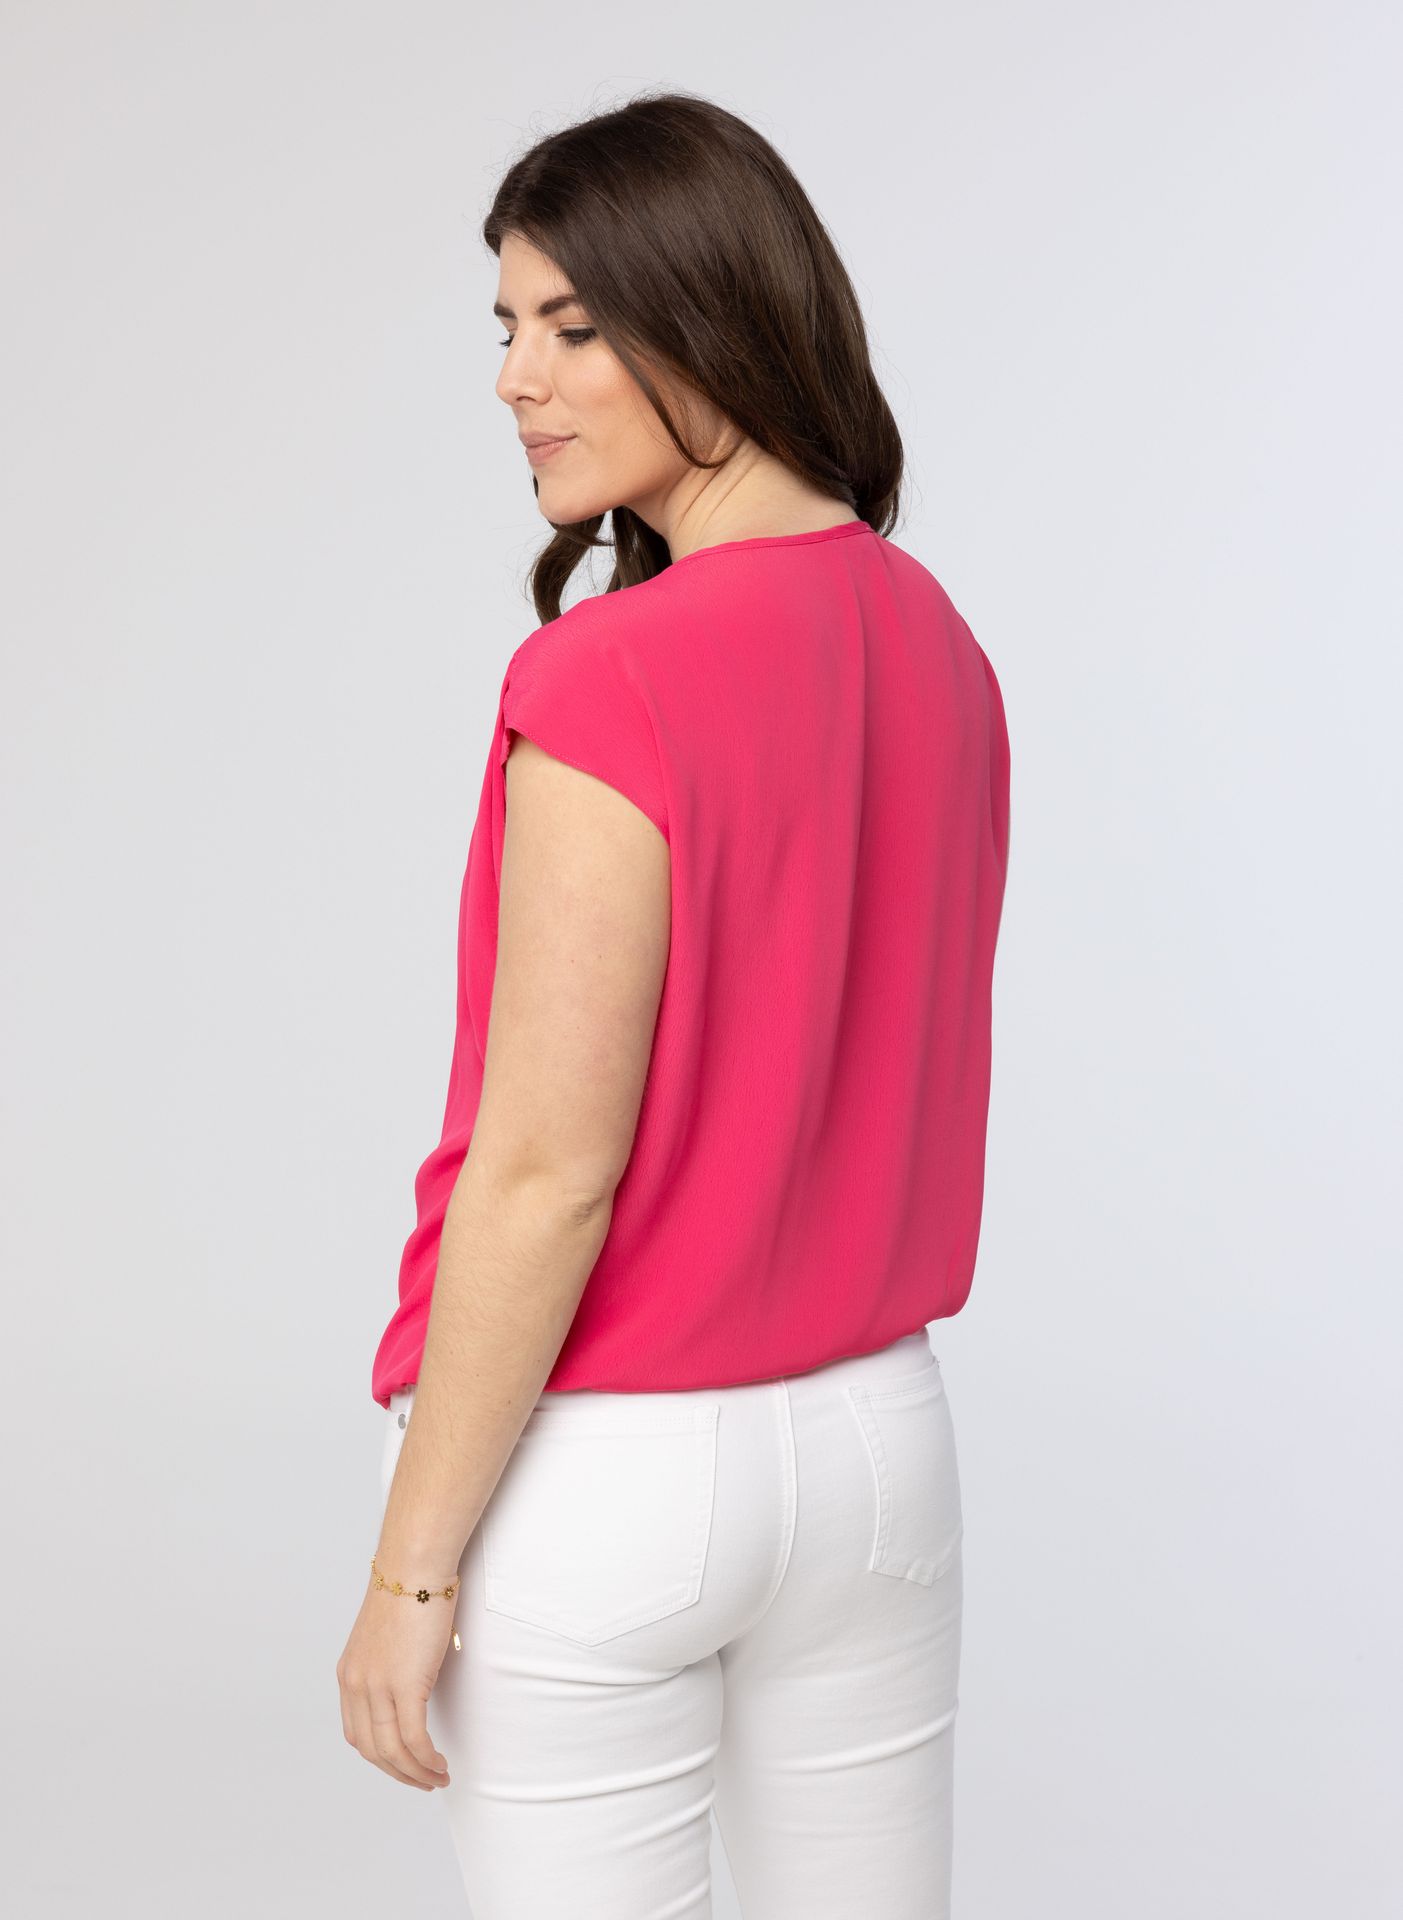 Norah Roze blouse pink 213836-900